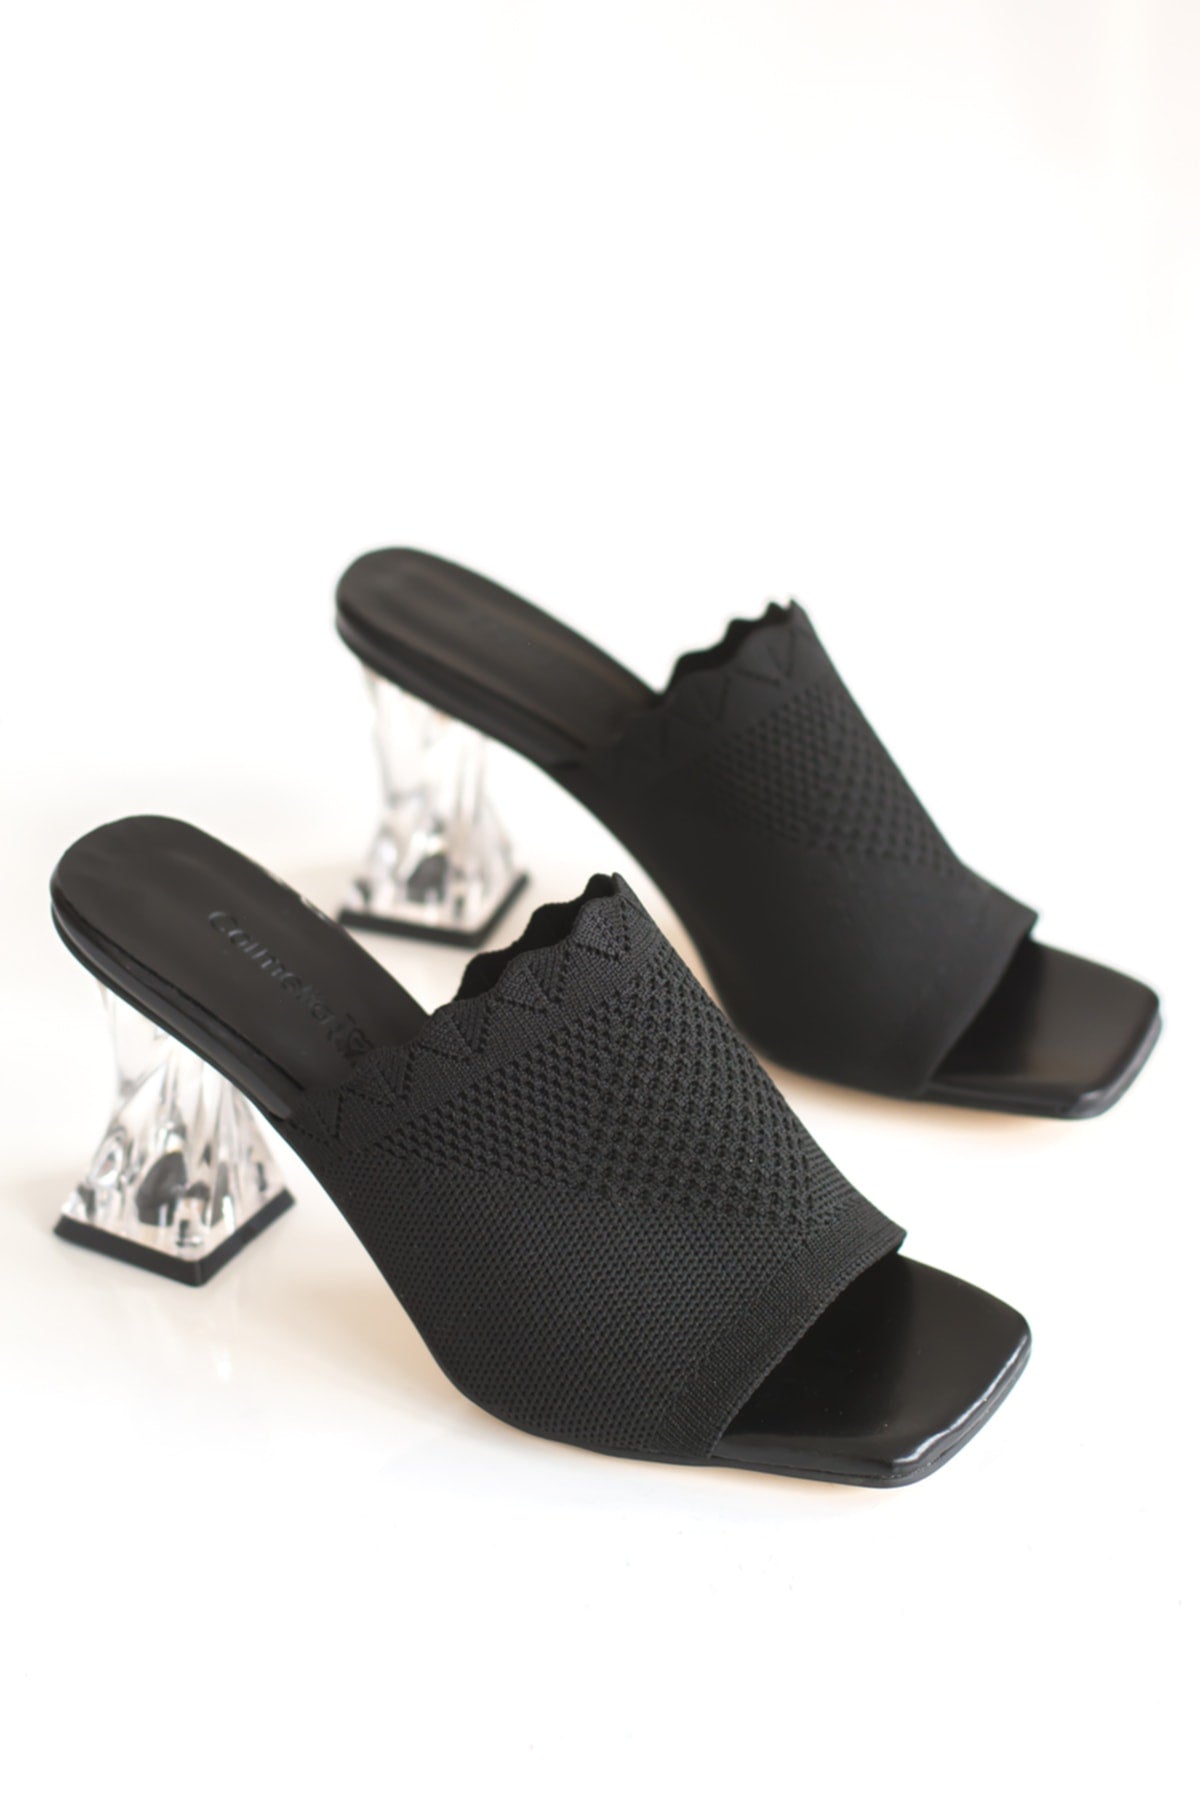 Daily Women's Knitting Lace Triko Slipper 7 cm Transparent Heel Shoes